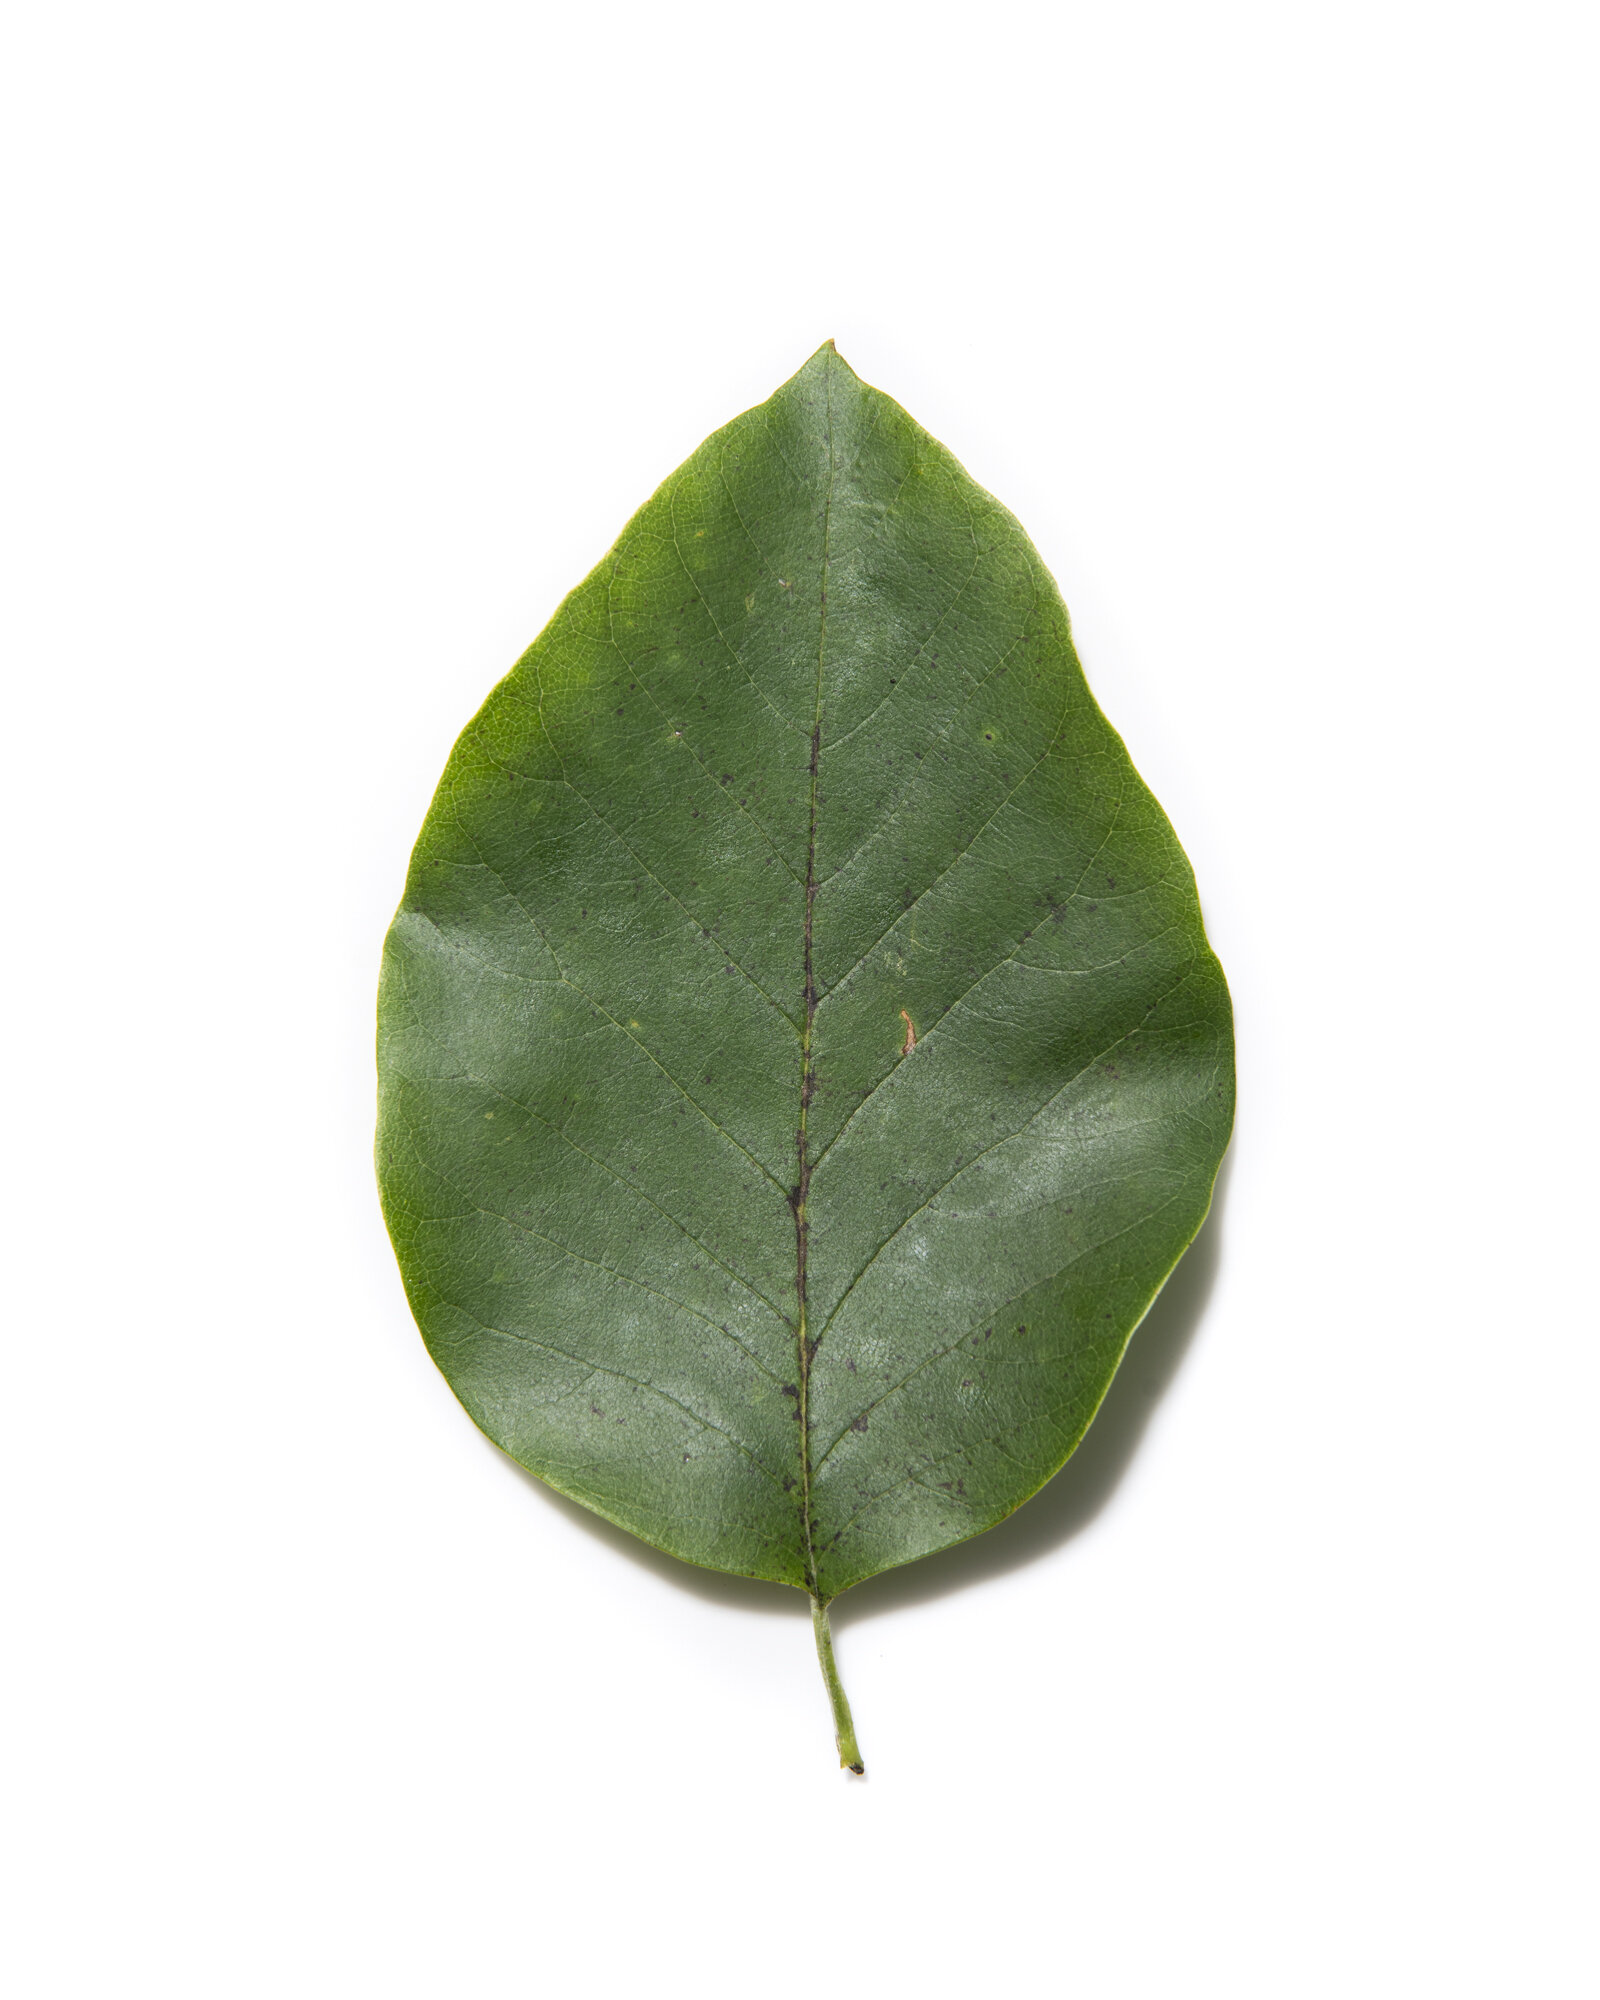 3067_Magnolia_acuminata_national_champion_cucumber_magnolia_stark_ohio_american_forests_brian_kelley_7-31-2019_leaf.jpg